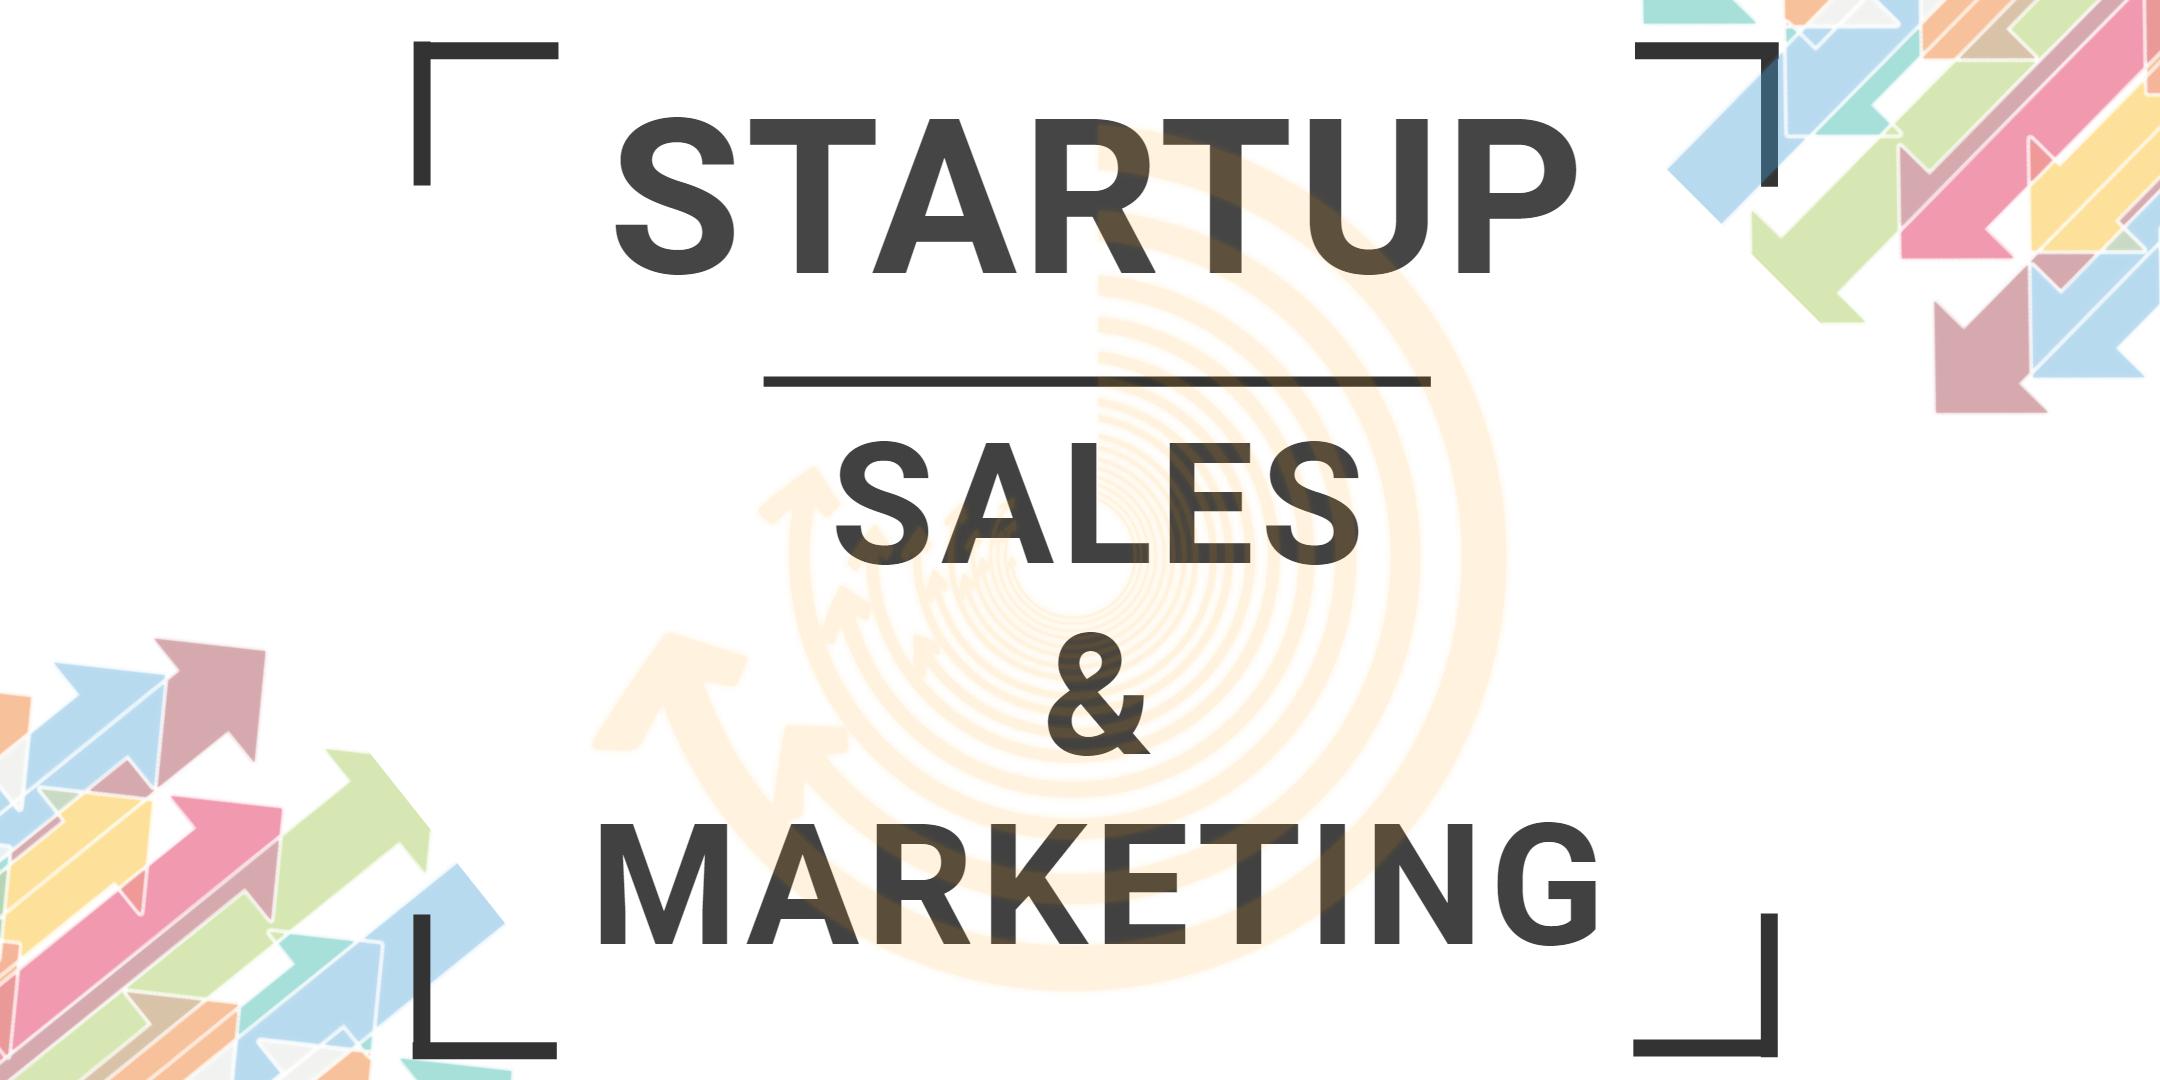 Startup Sales & Marketing Strategies